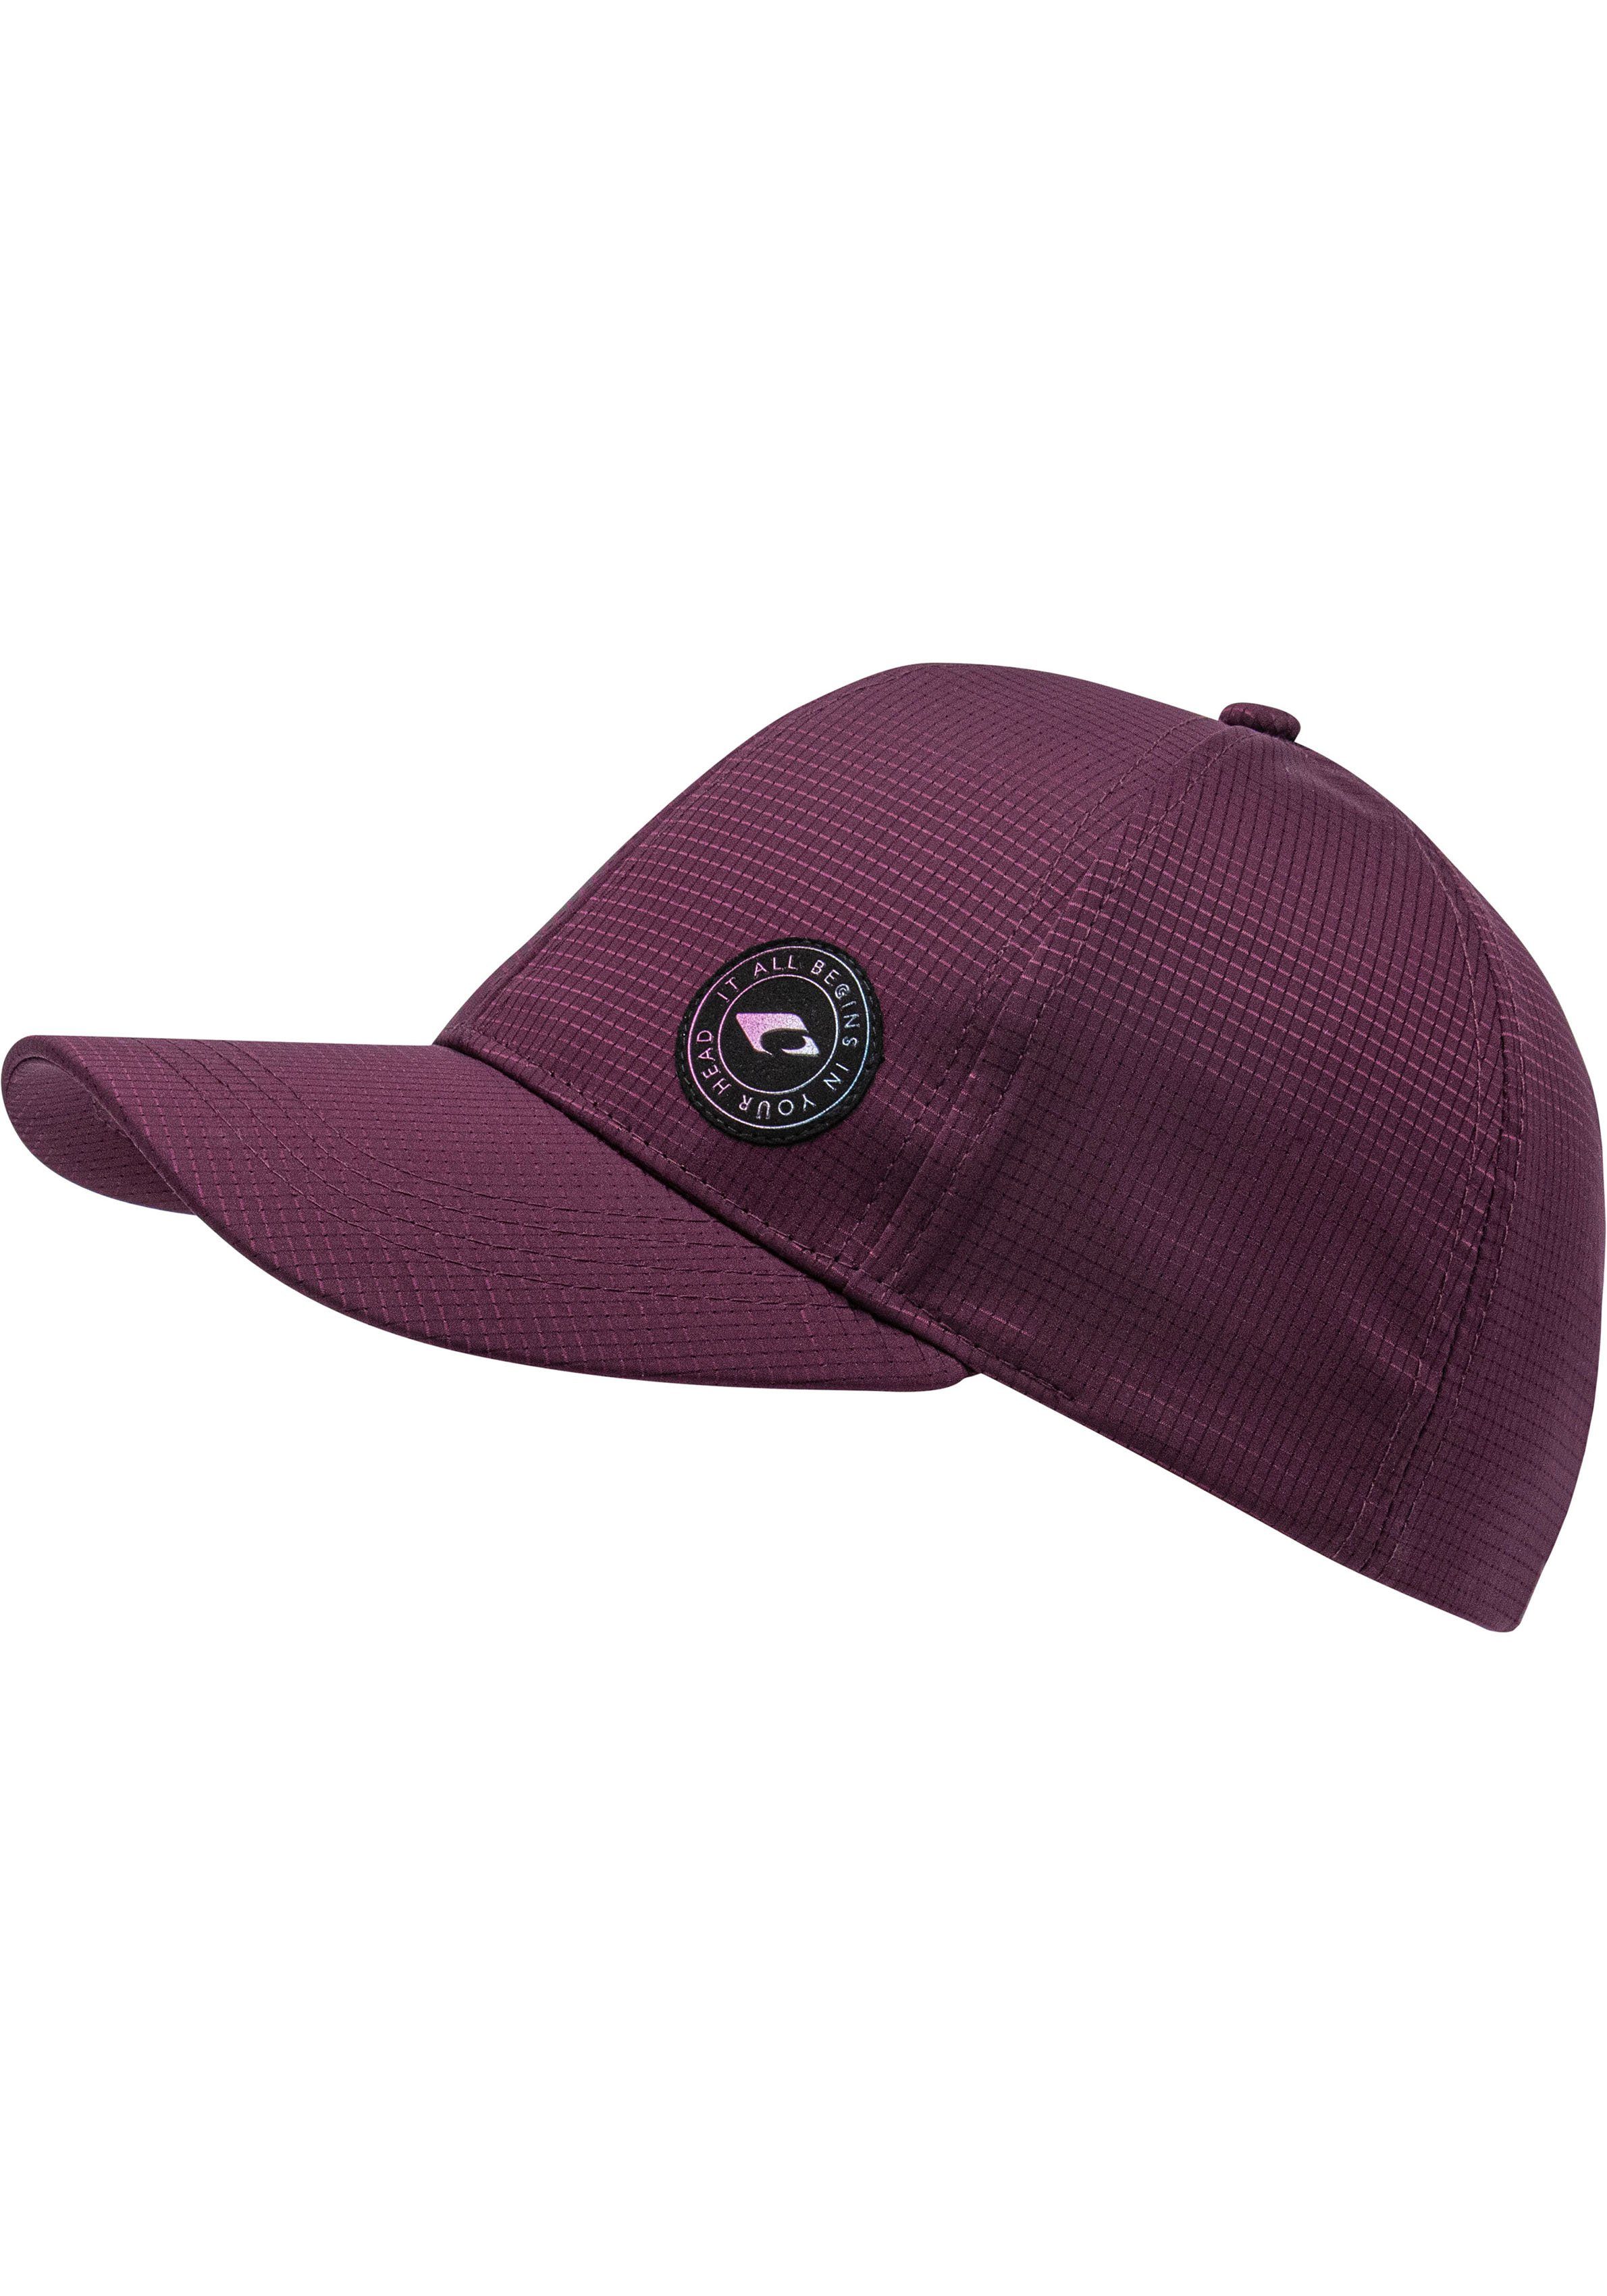 chillouts Baseball Cap Langley Hat bordeaux | Baseball Caps